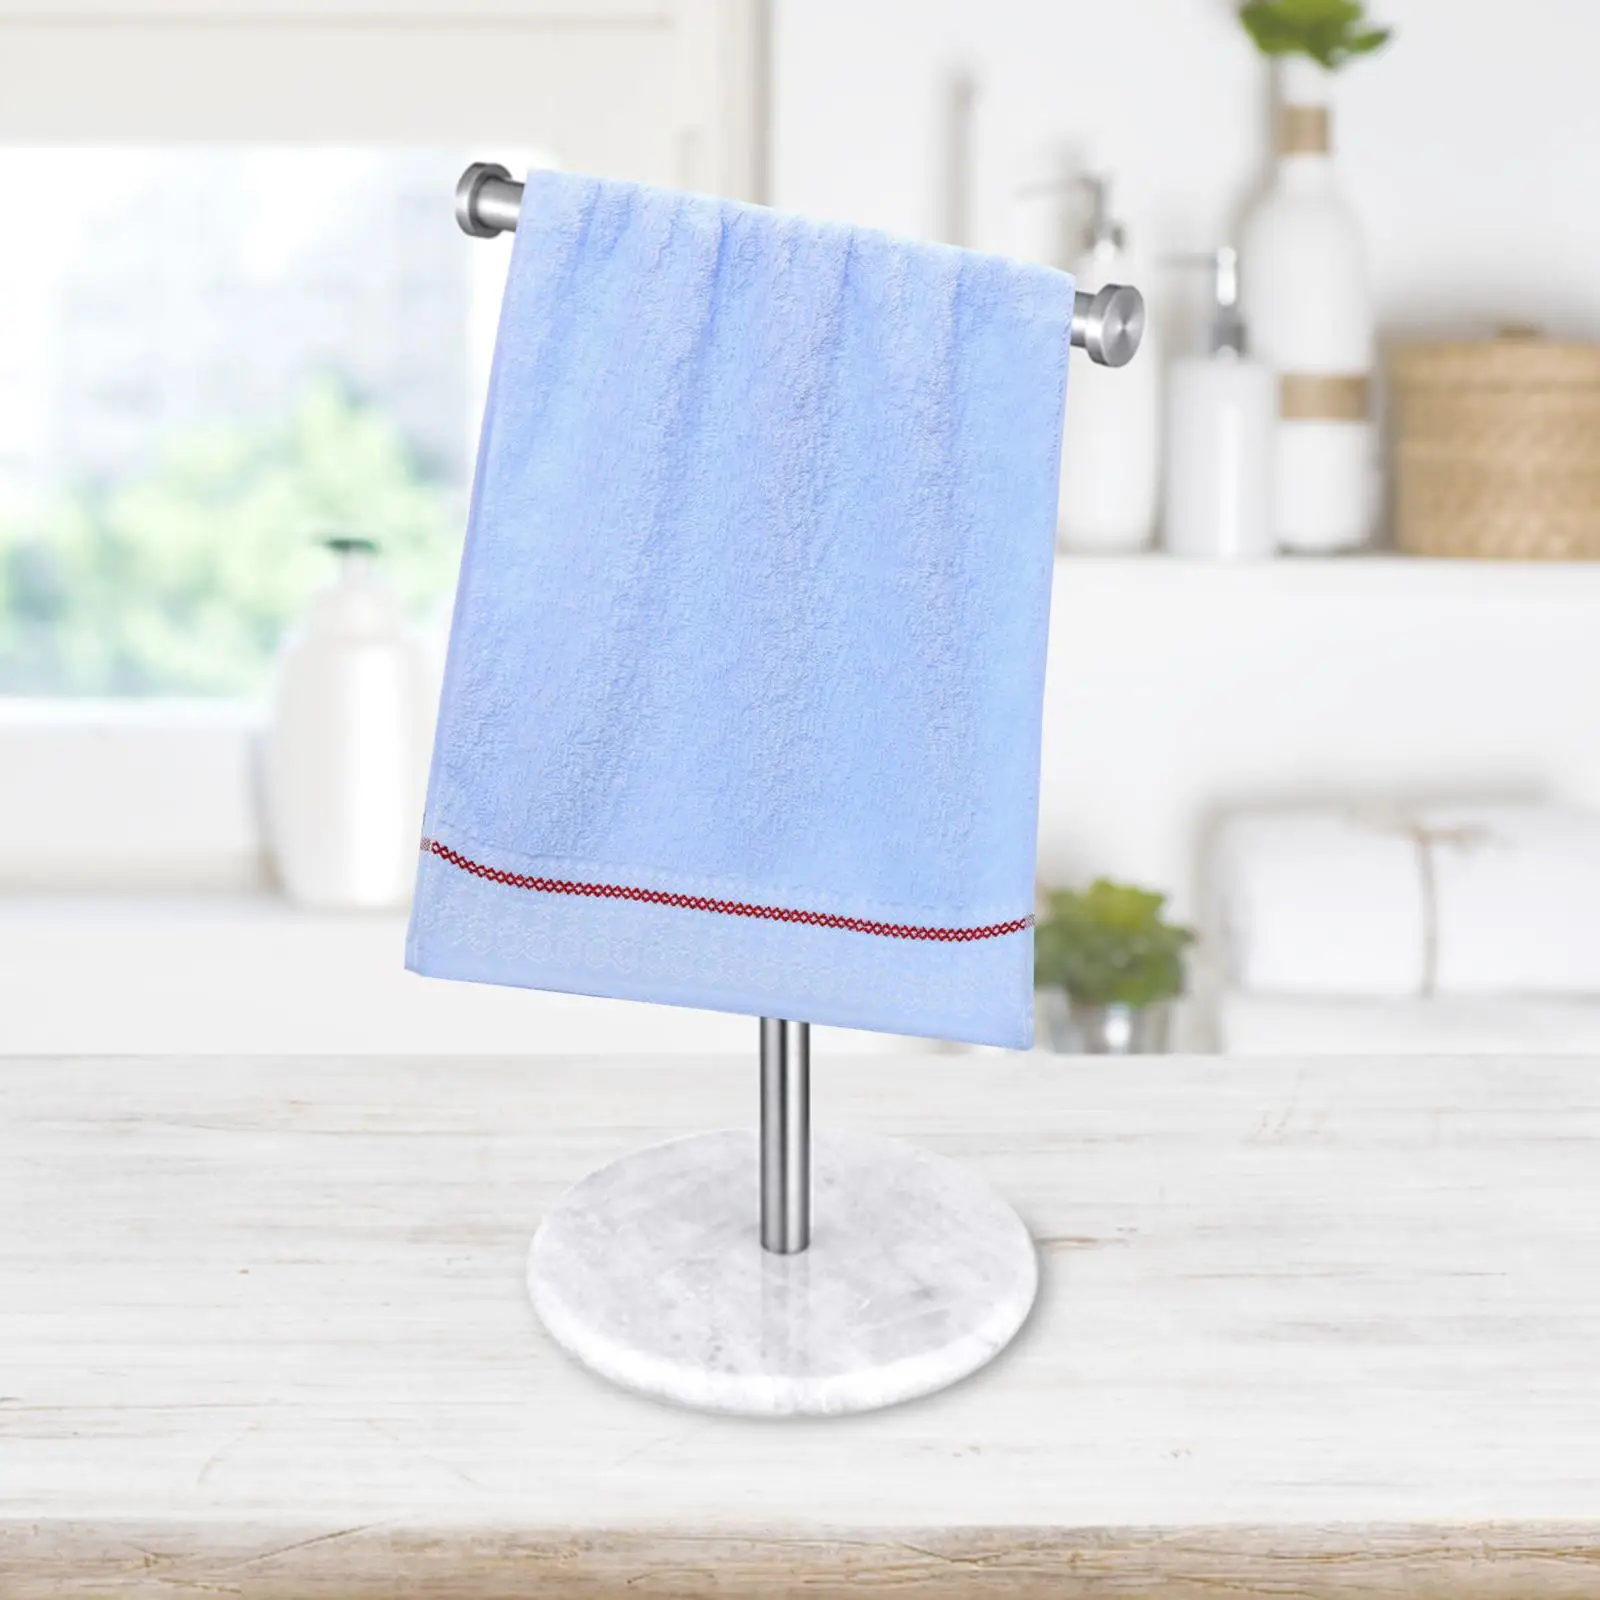 Towel Bar Rack Stand Towel Bar Hand Towel Hanger Multifunction Hanging Paper Towel Holder Bath Towel Stand for Vanity Countertop